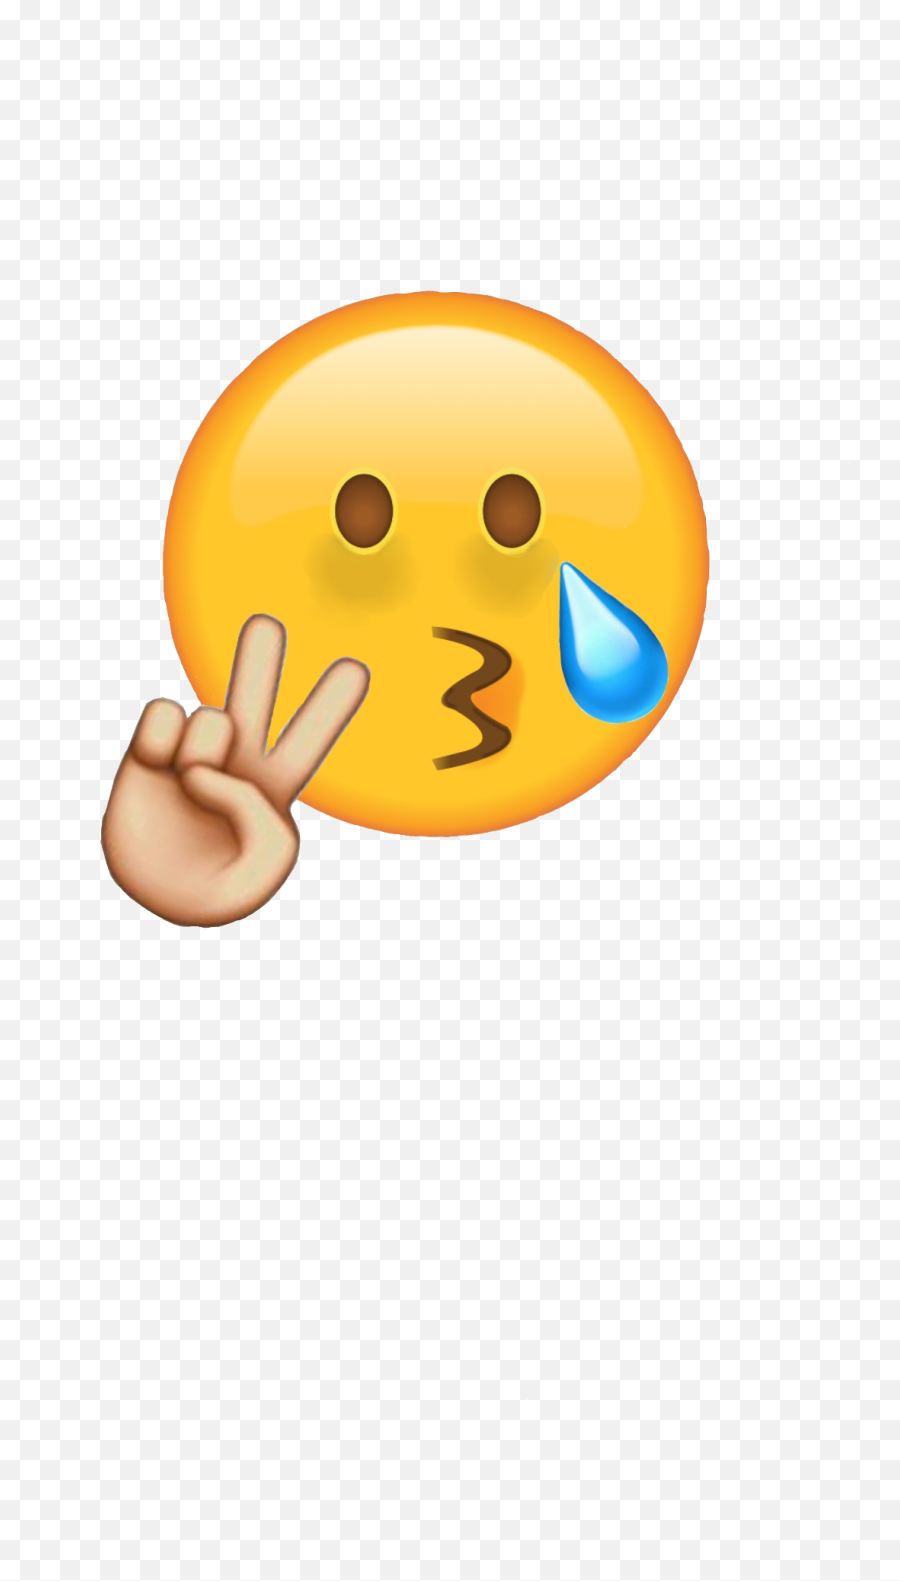 Mentalbreakdown Cry Peacesign Peace Meinthemirror - Crying Meme Peace Sign Emoji,Emoji Peace Sign